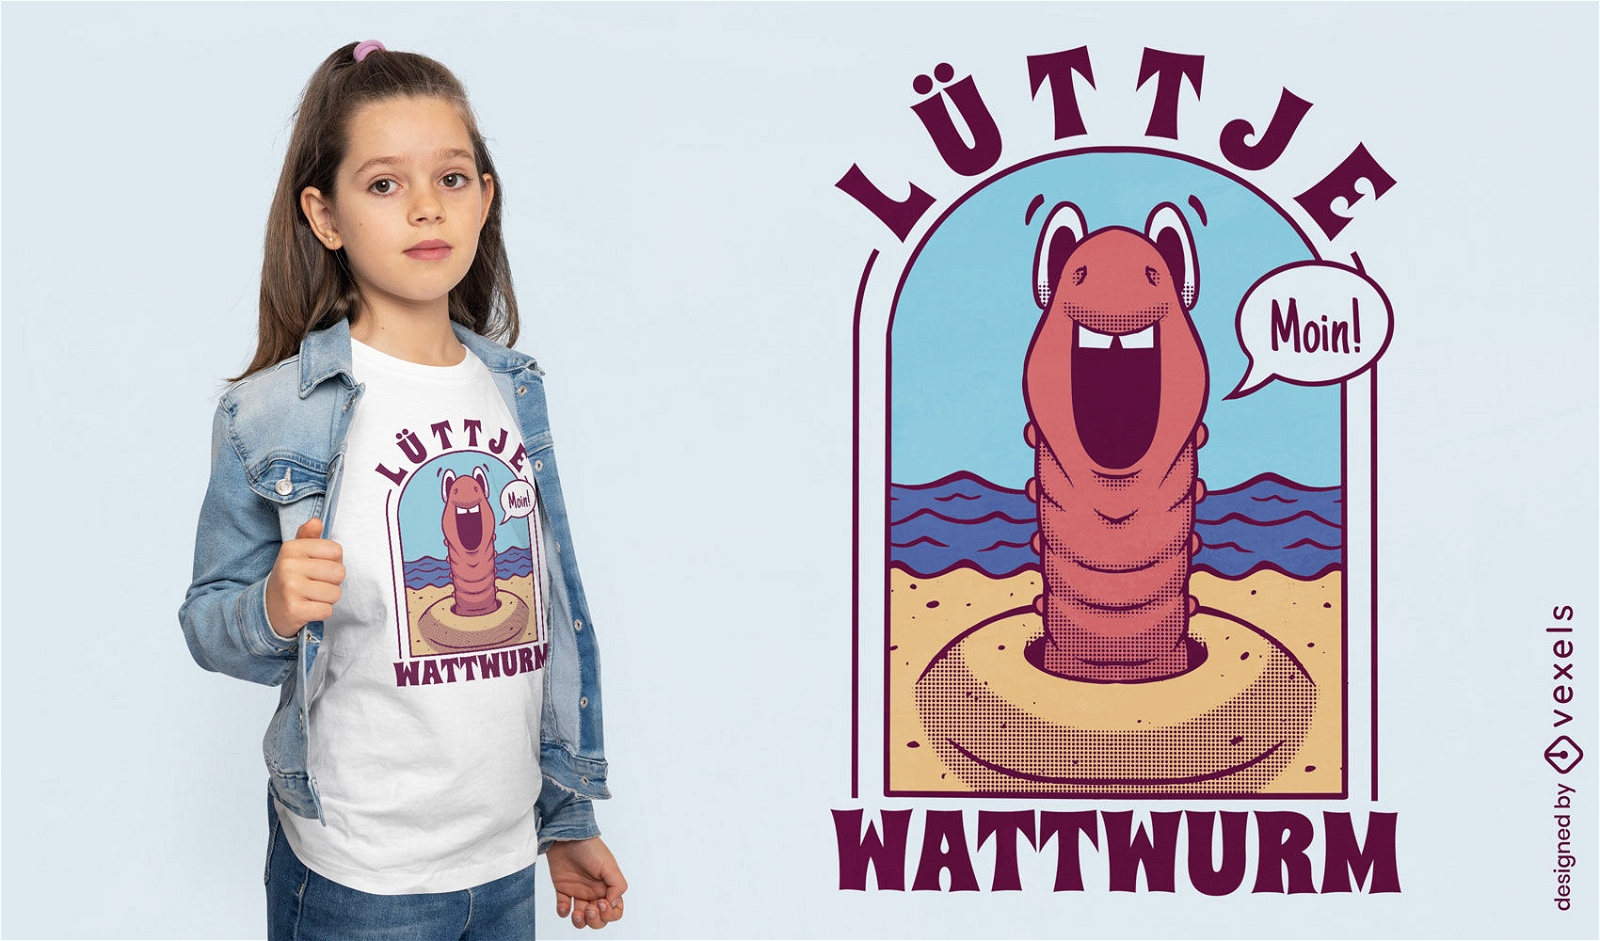 Worm animal cartoon at beach t-shirt design